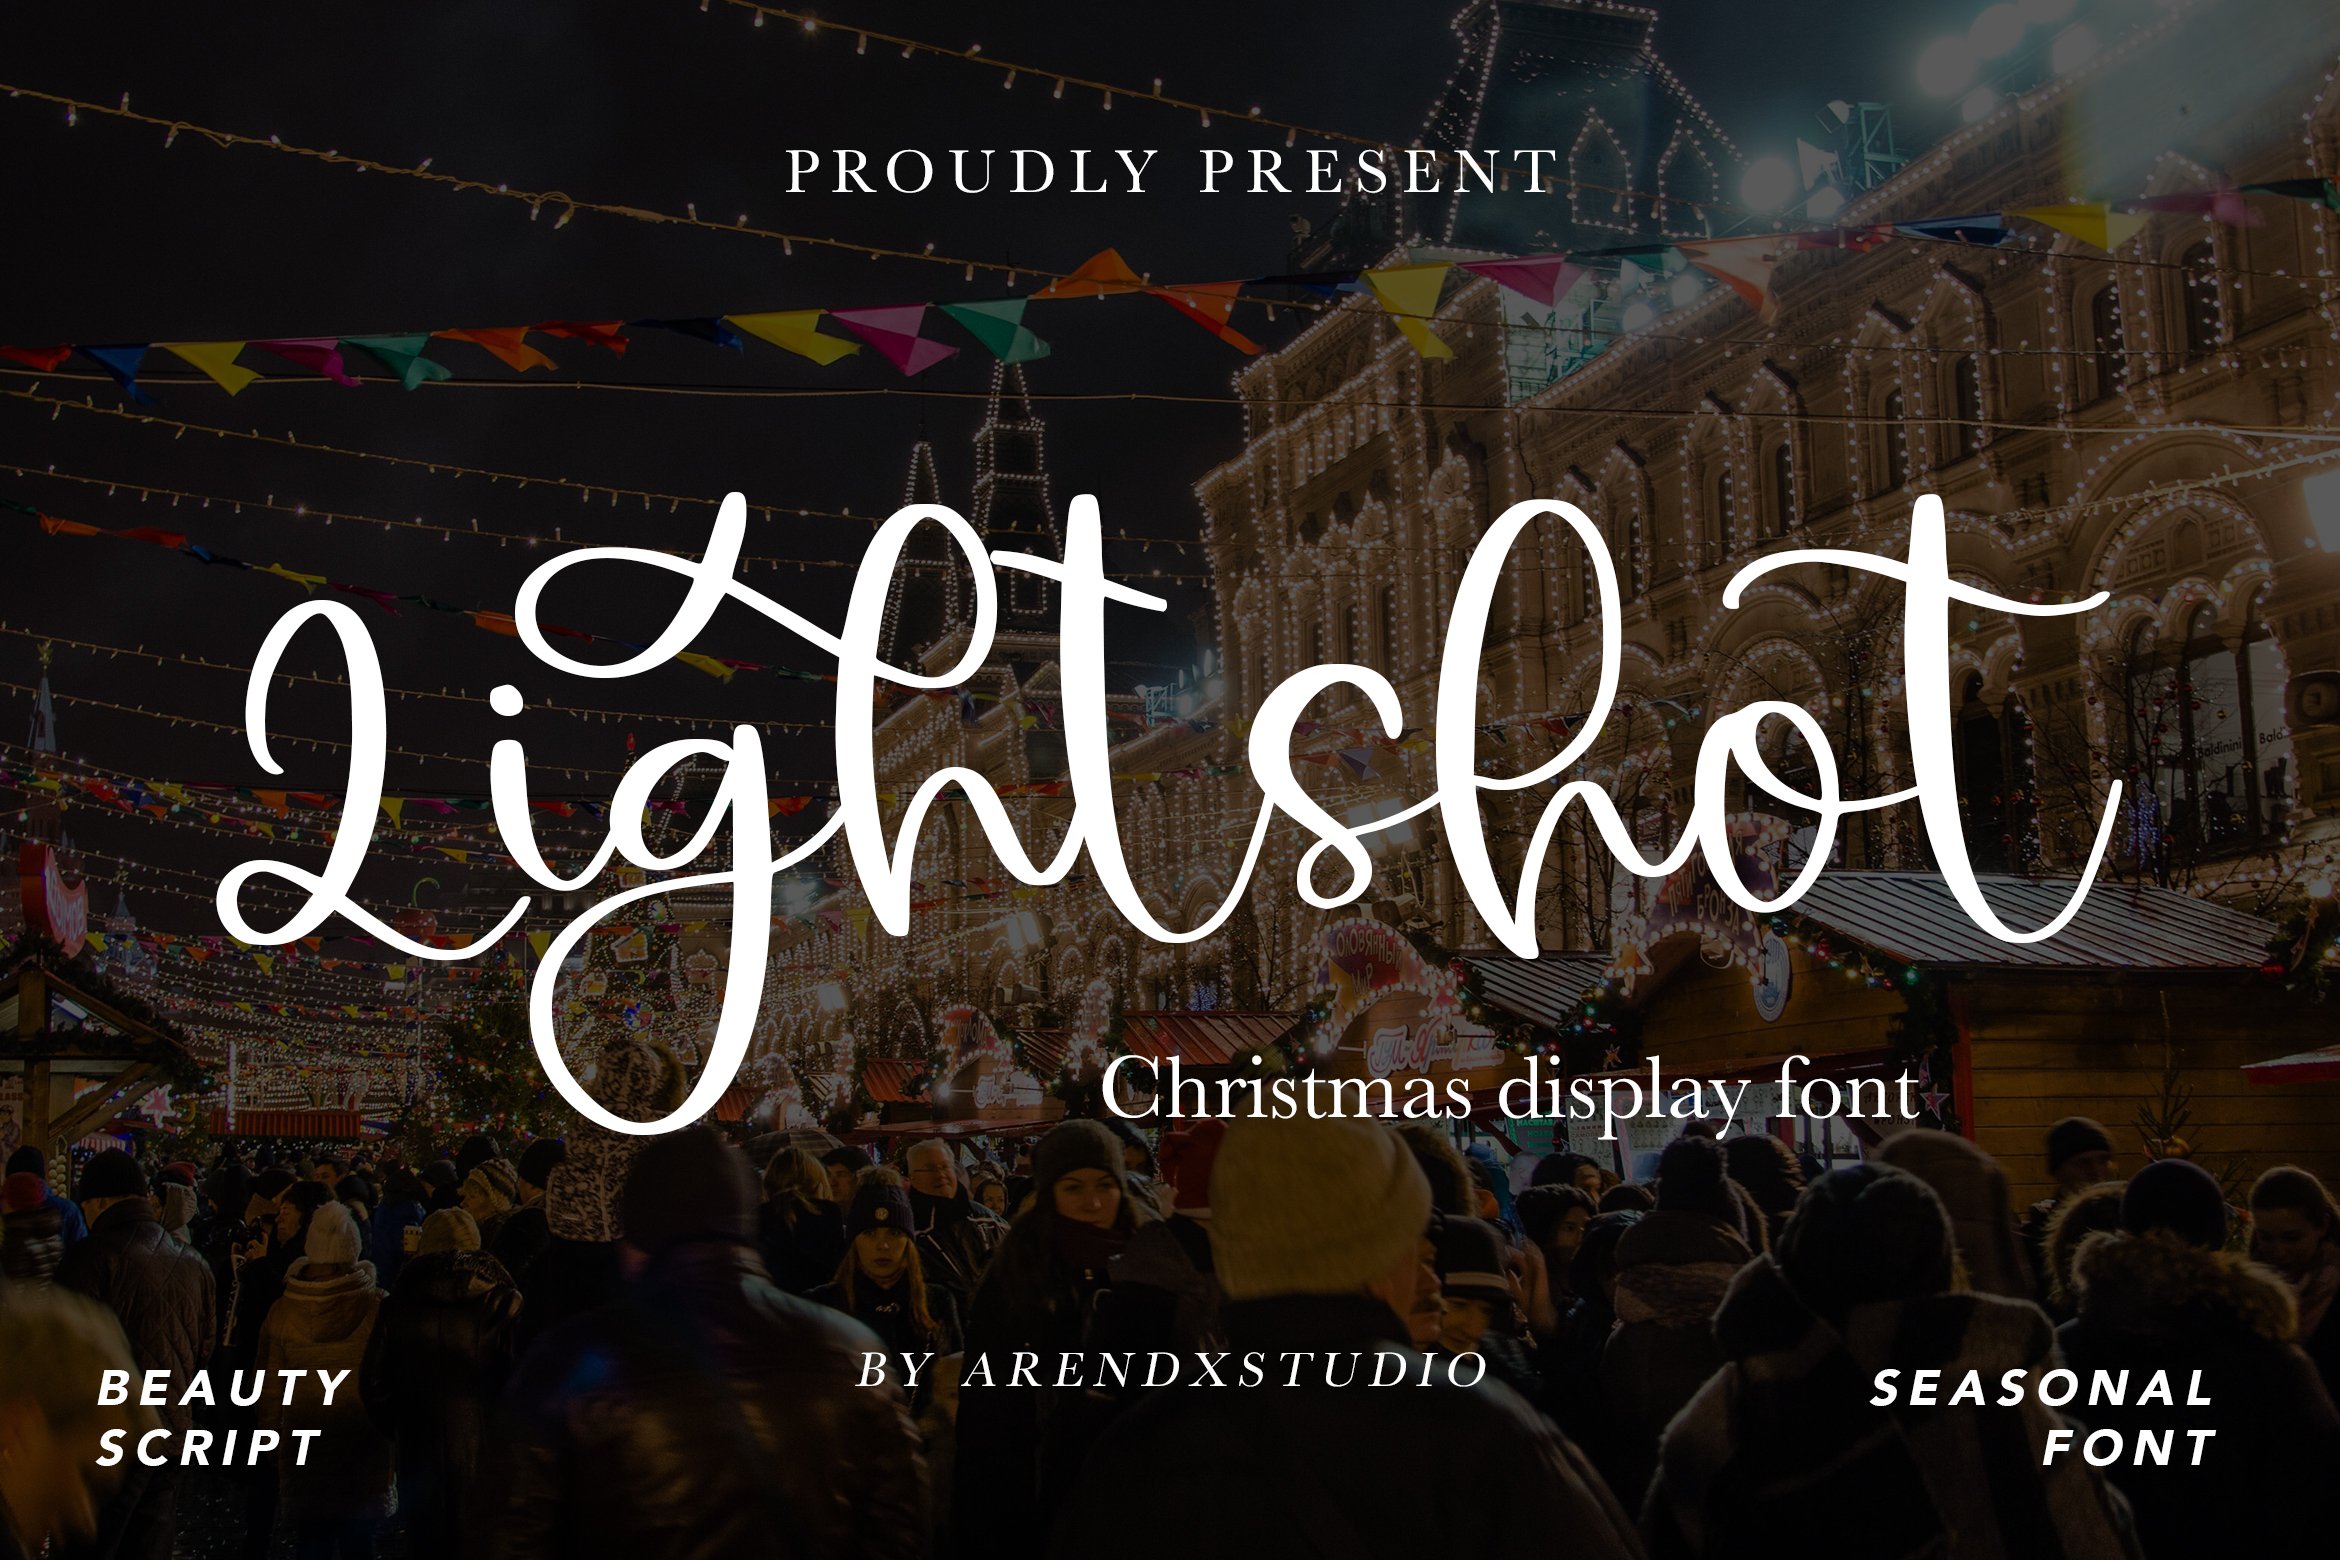 Lightshot - Christmas Display Font cover image.